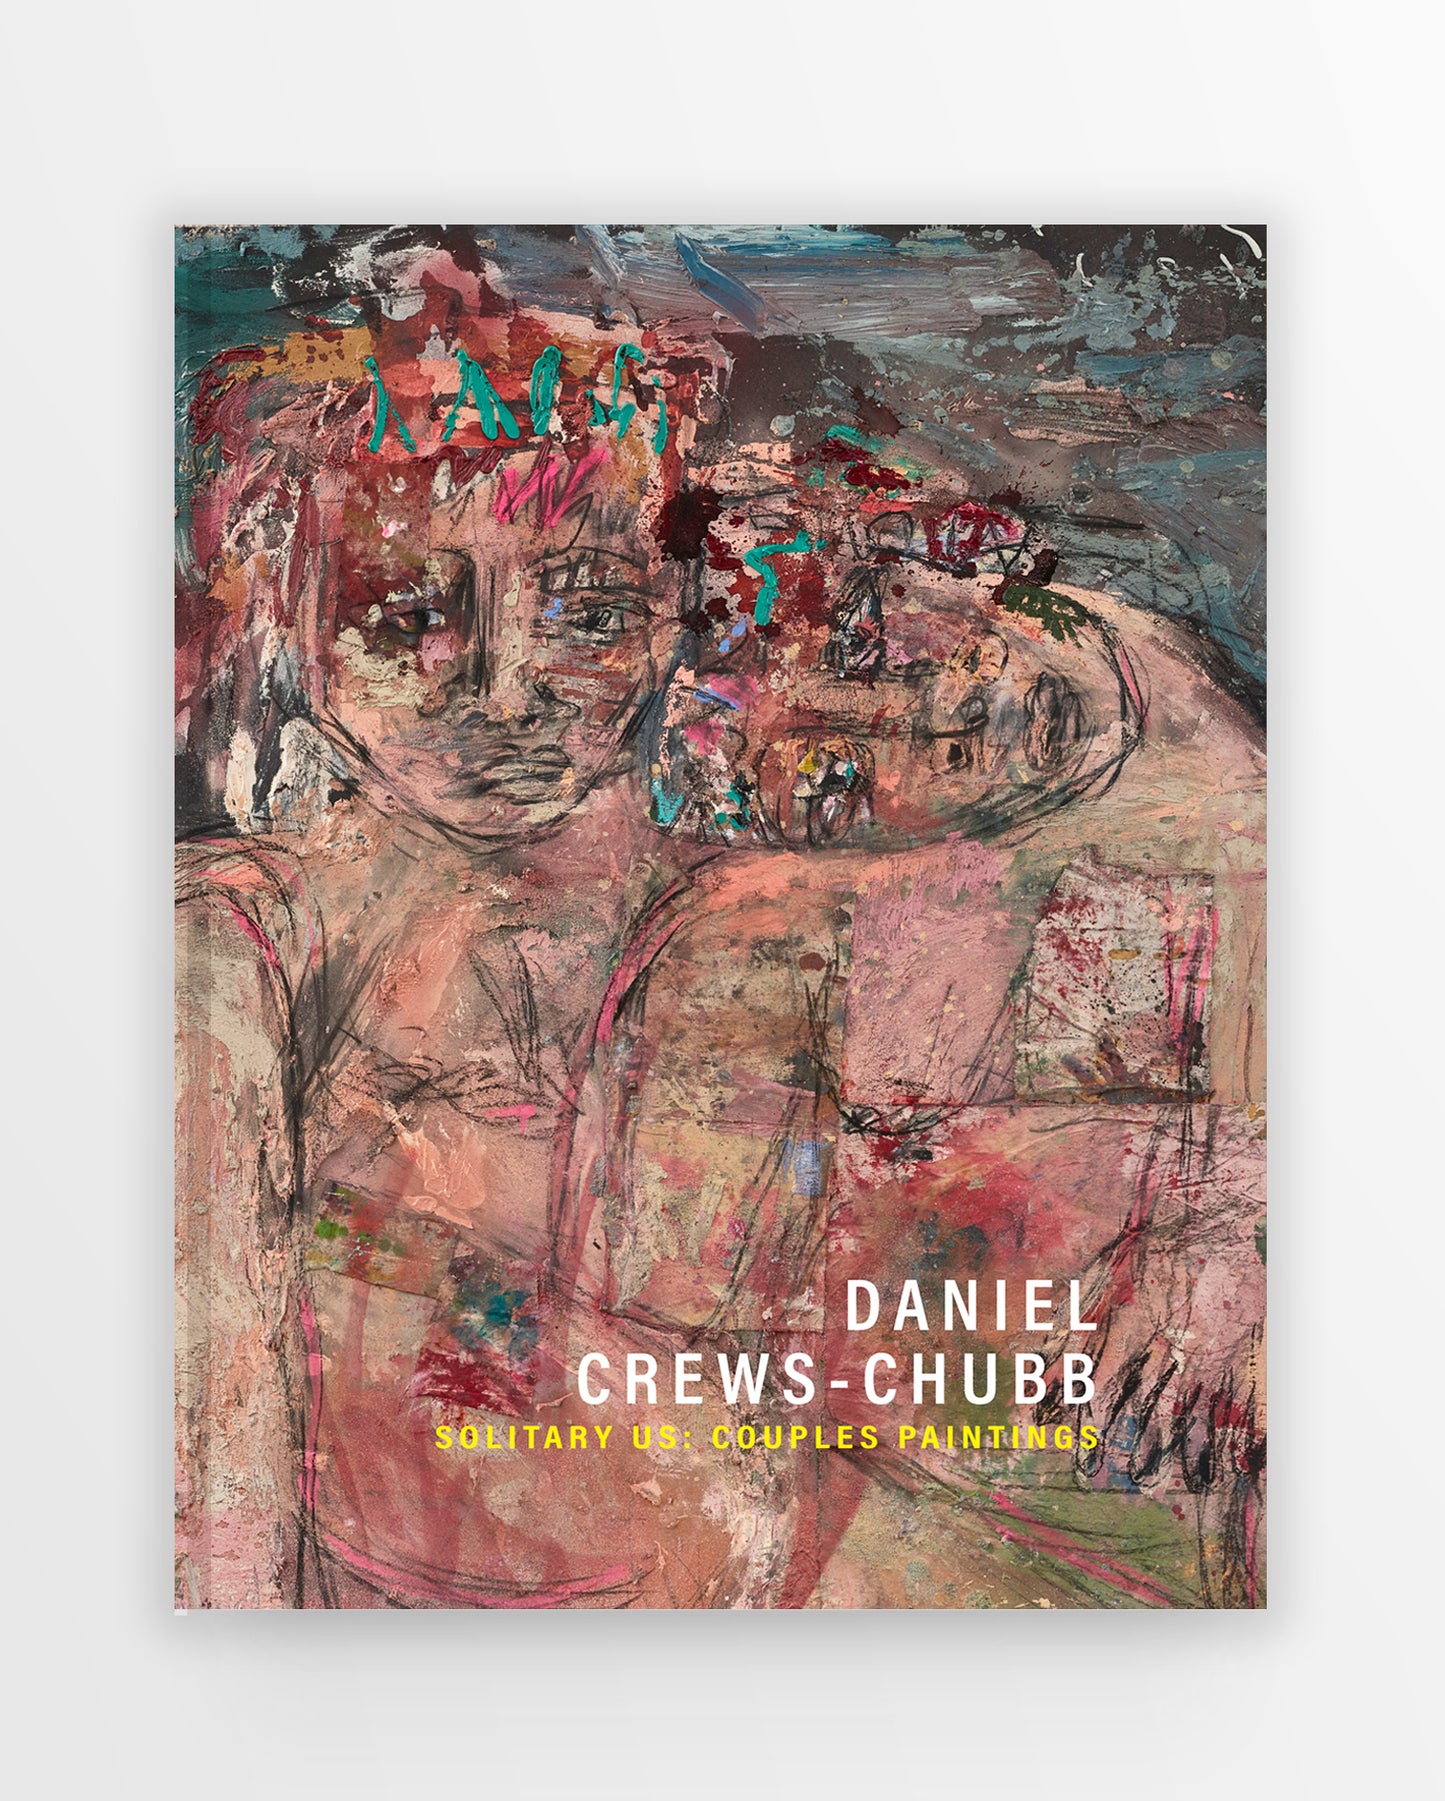 Daniel Crews-Chubb: Solitary Us: Couples Paintings